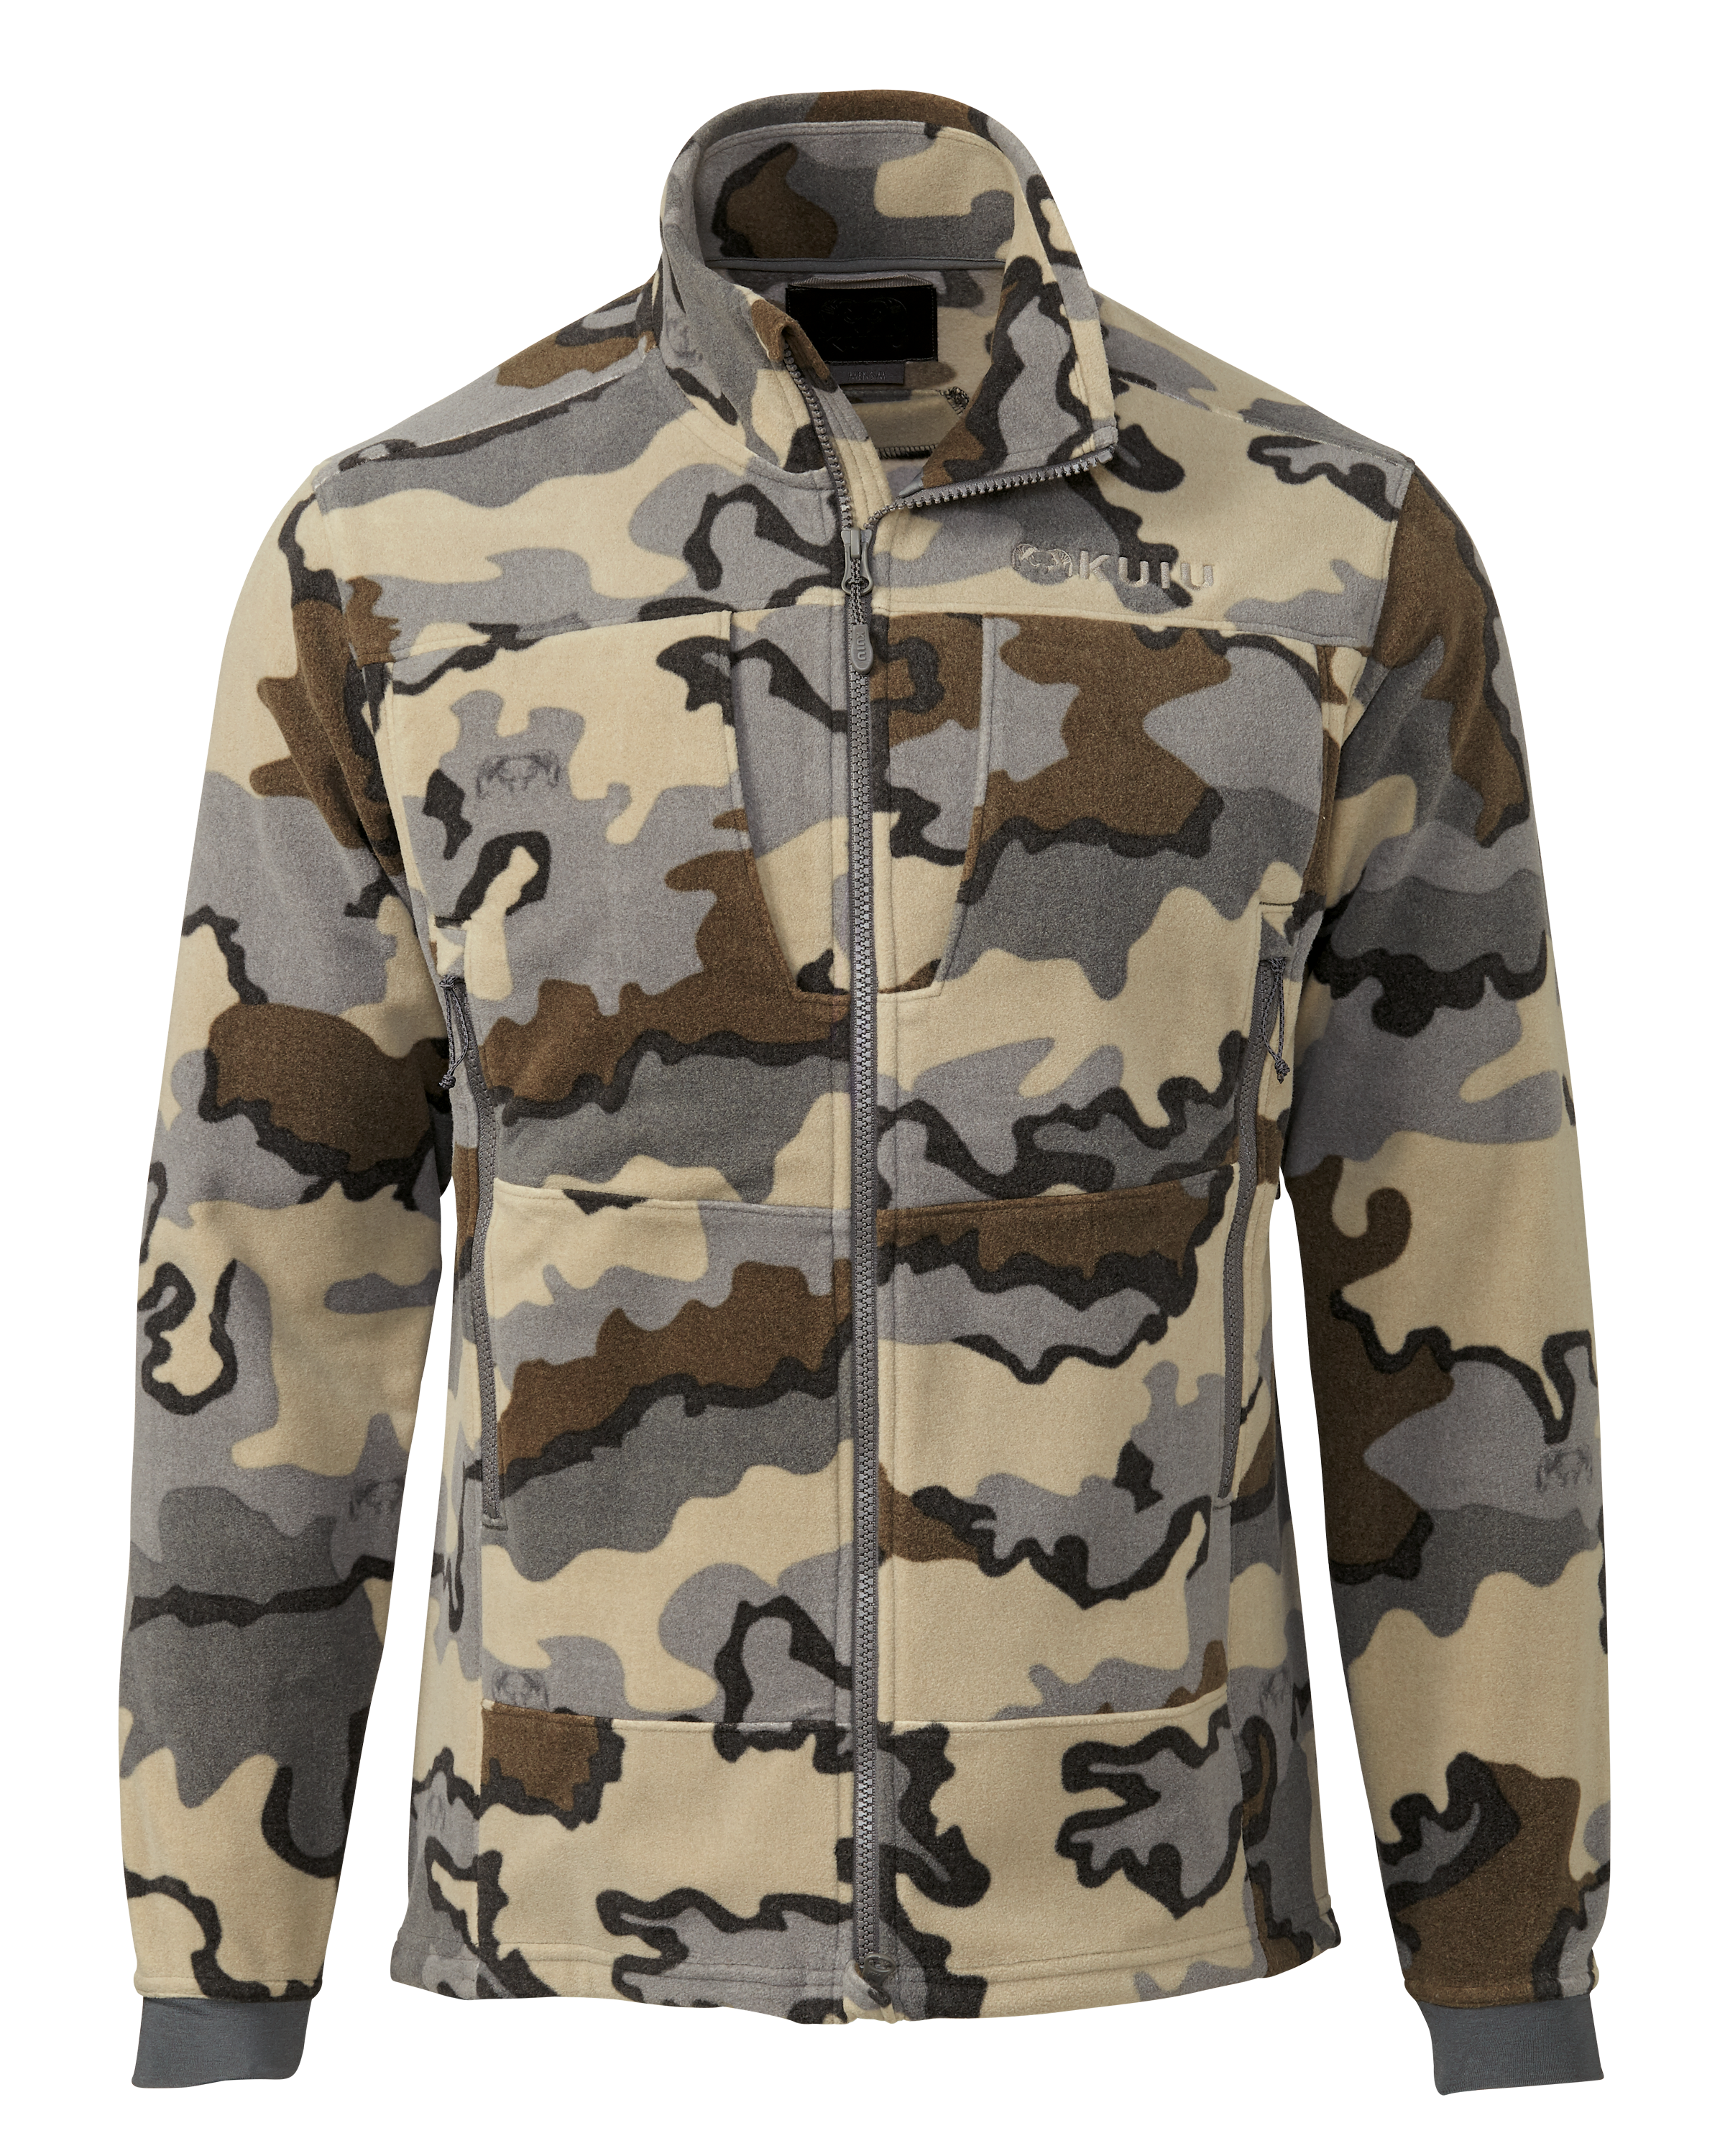 KUIU Wind Pro Fleece Full Zip Hunting Jacket in Vias | Size 2XL